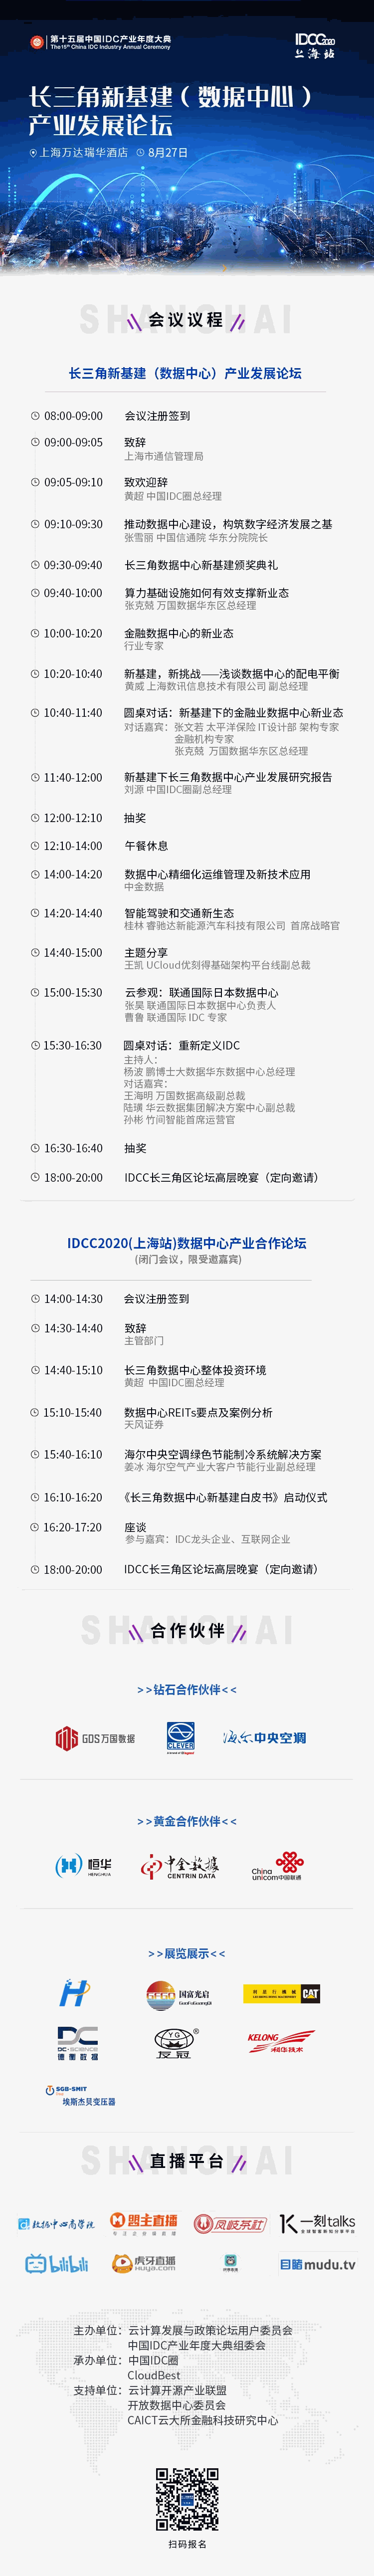 IDCC2020 上海站 长三角 议程